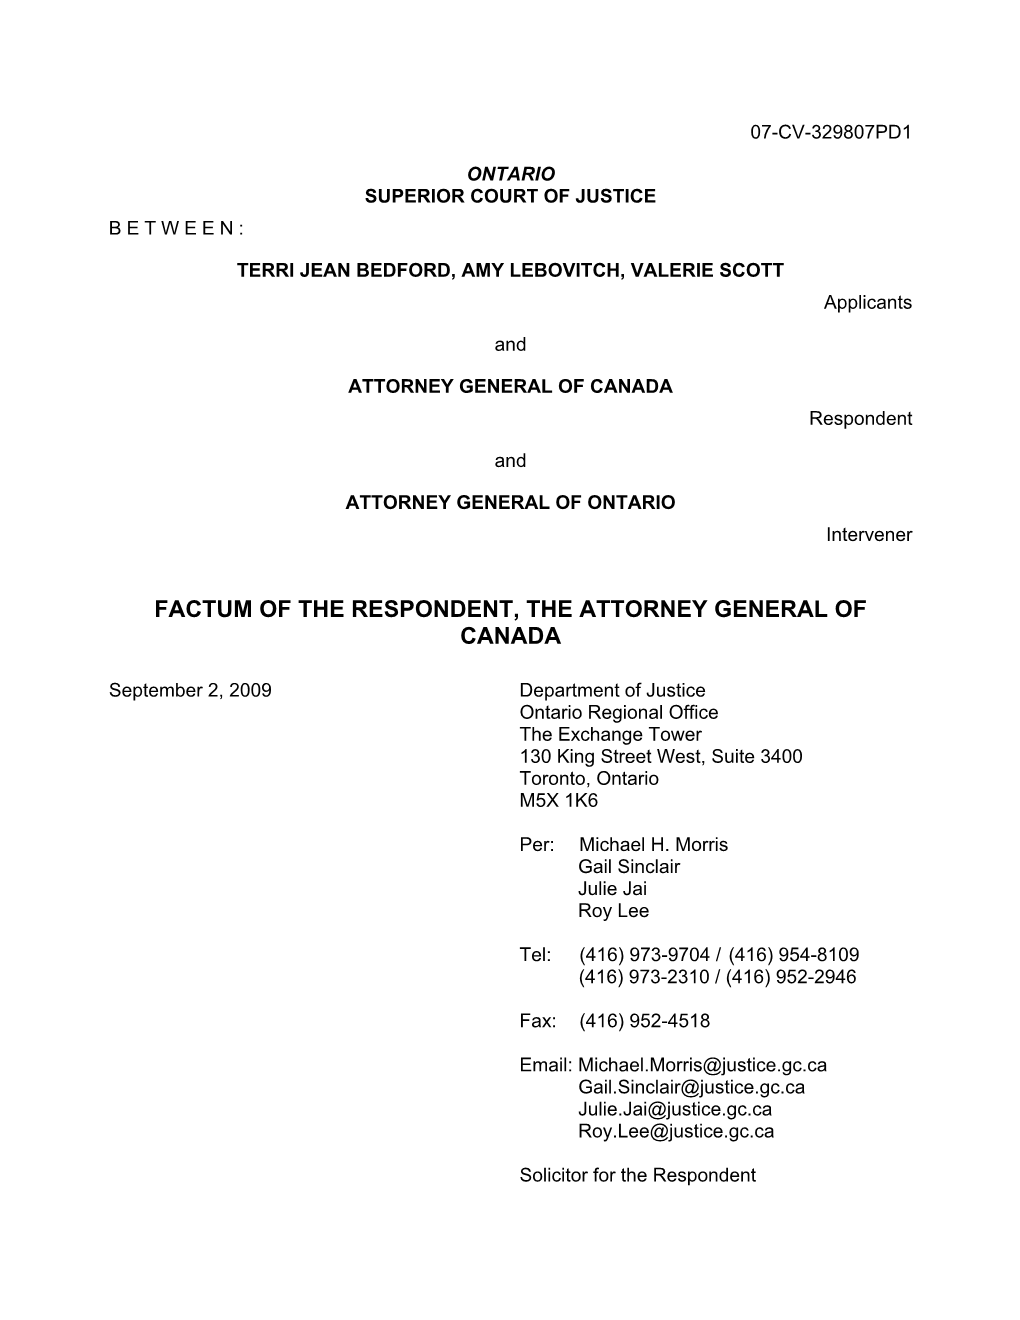 Factum of the Respondent, the Attorney General of Canada